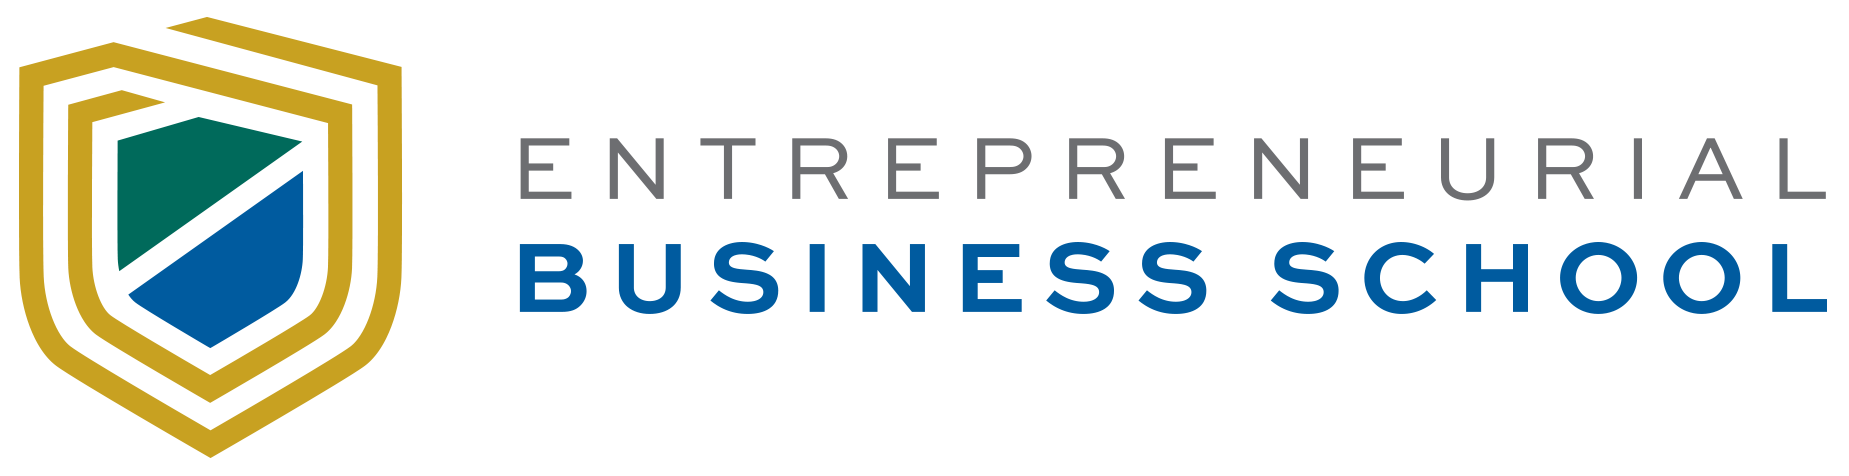 Entrepreneurial Business School 